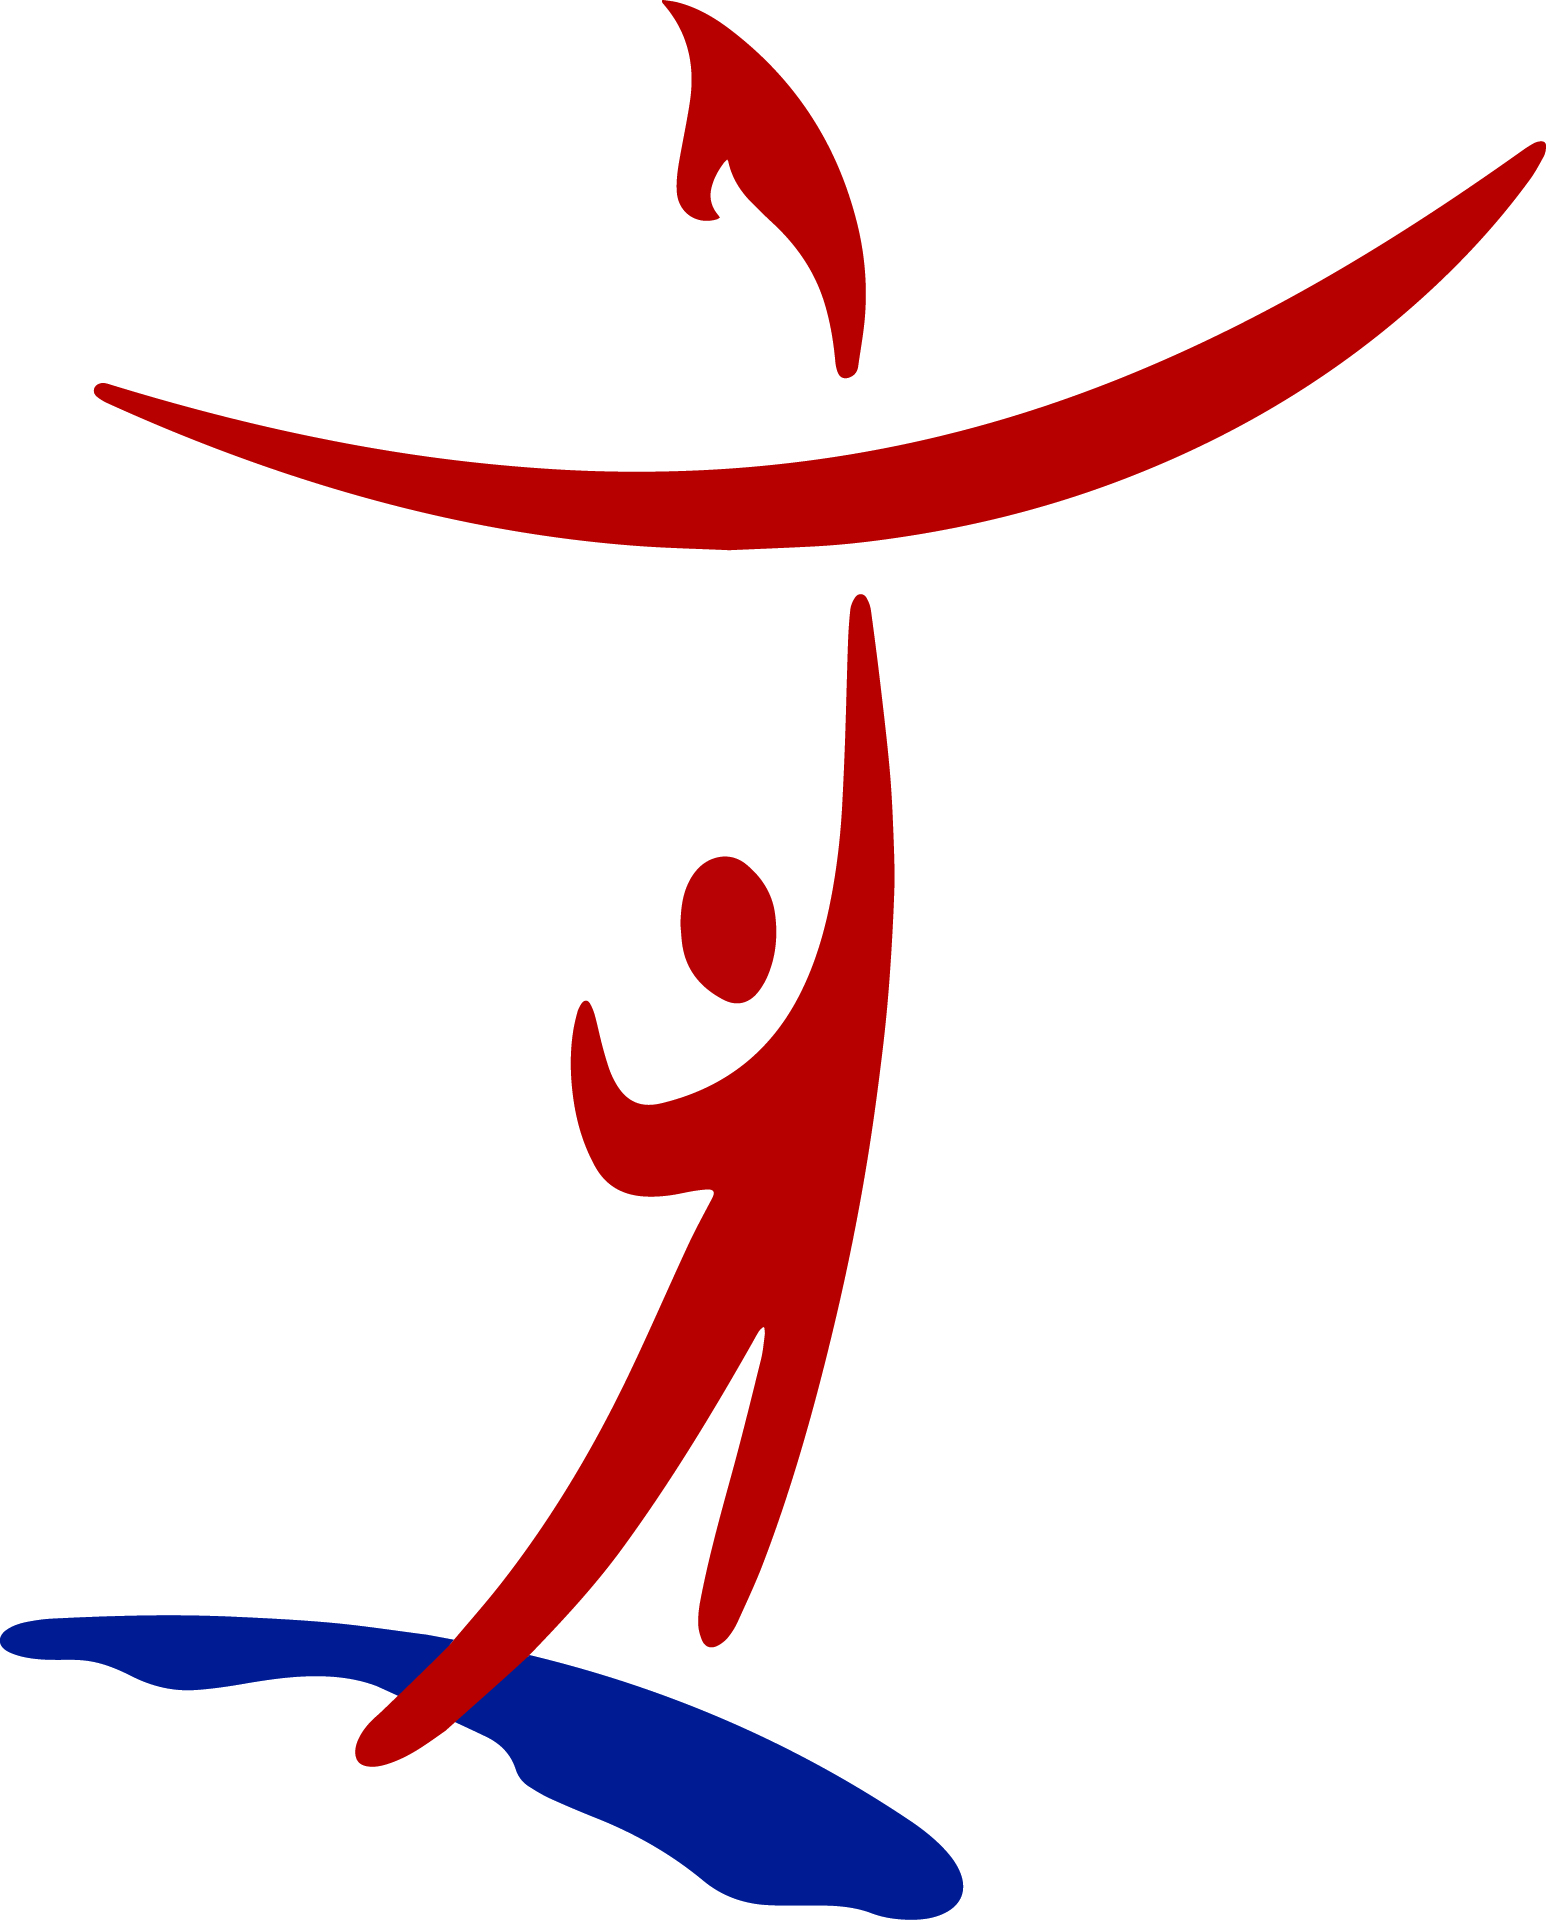 uucd.ca logo